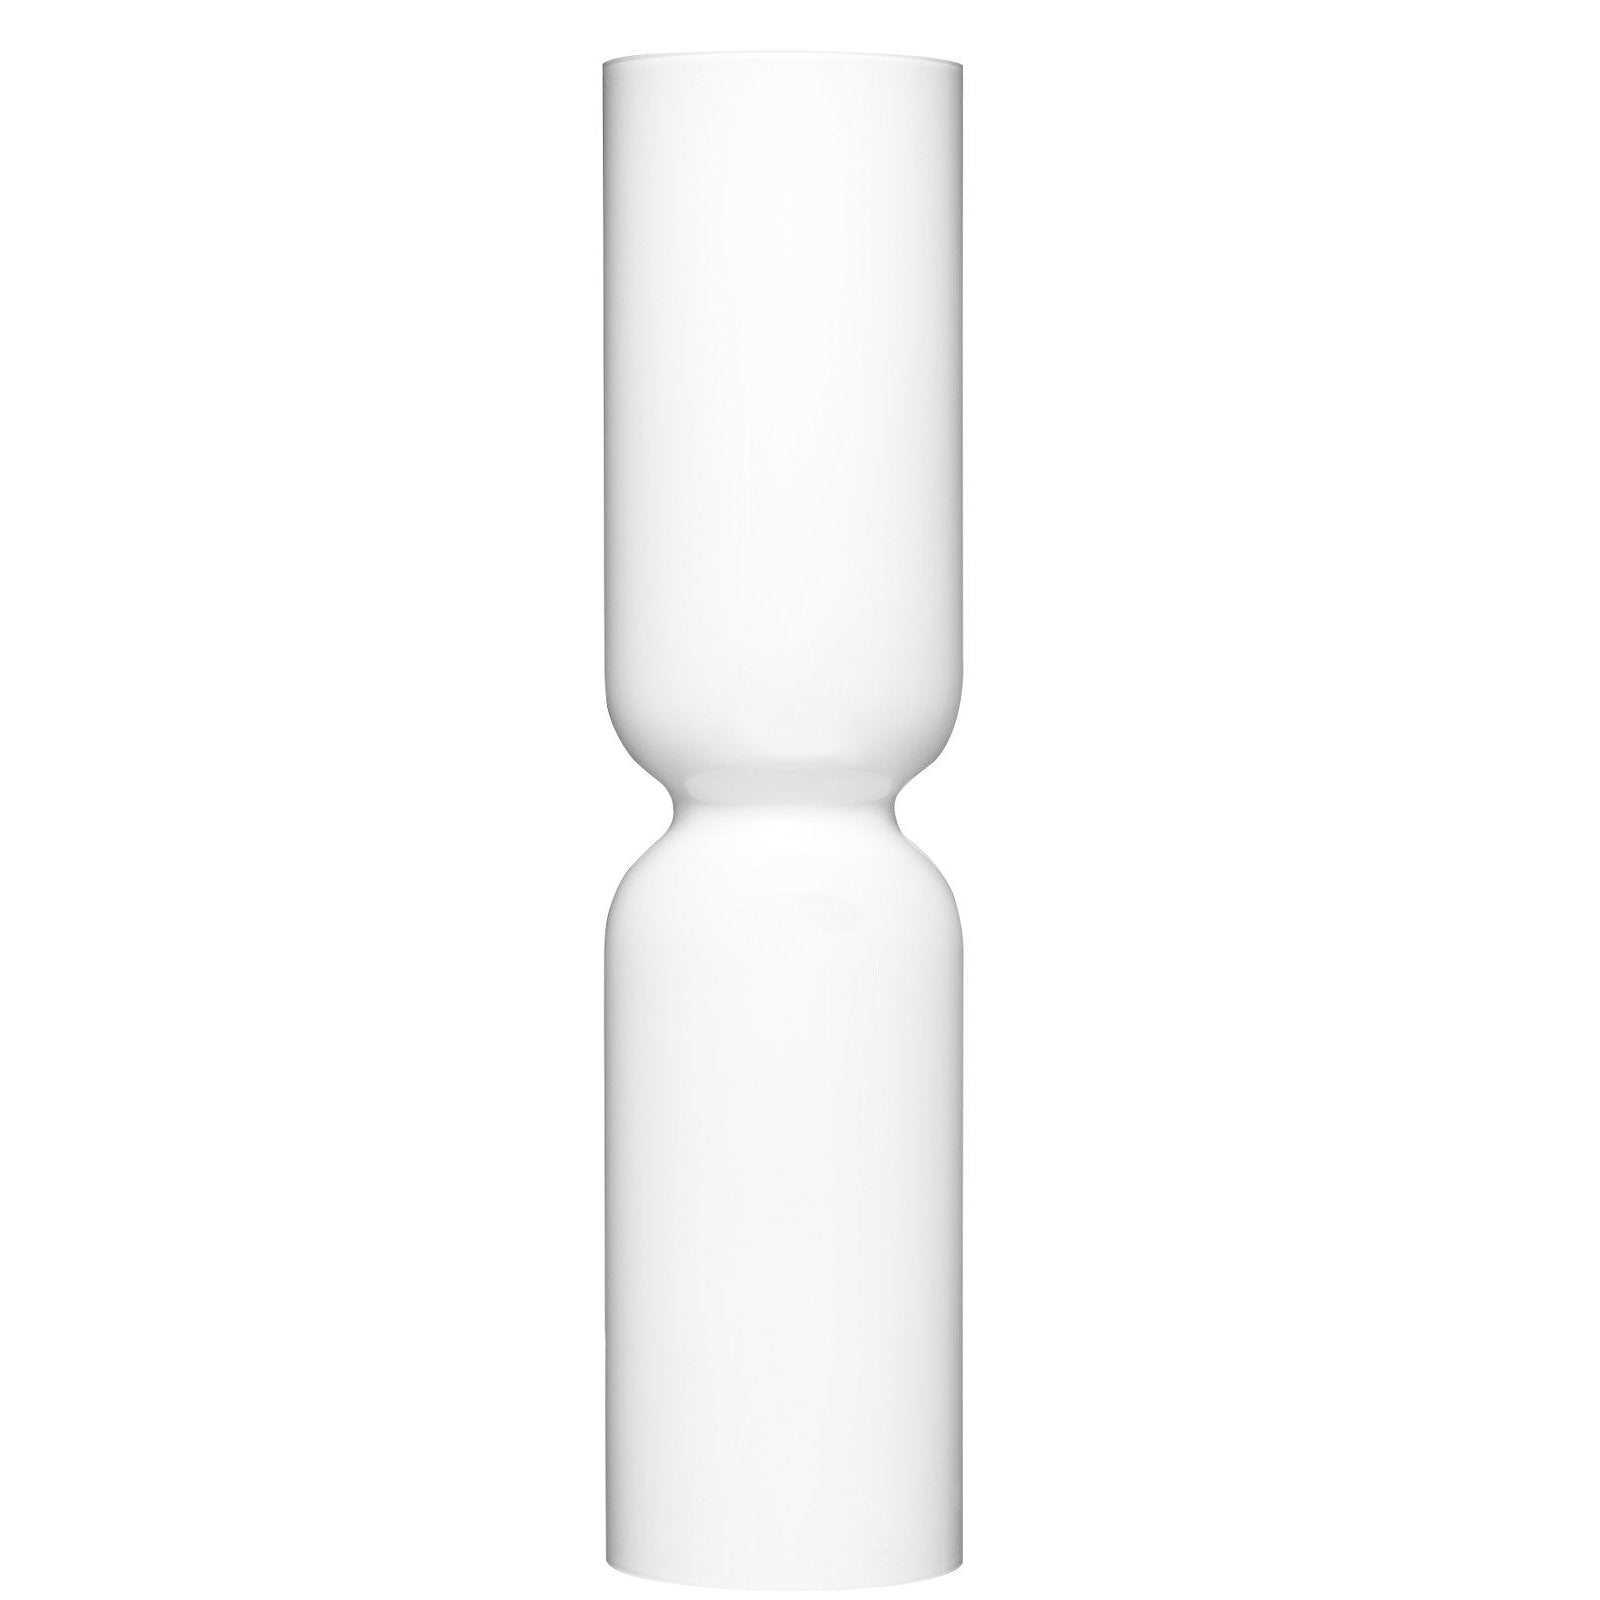 Iittala Lantern Candle Holder Opal, 60 cm